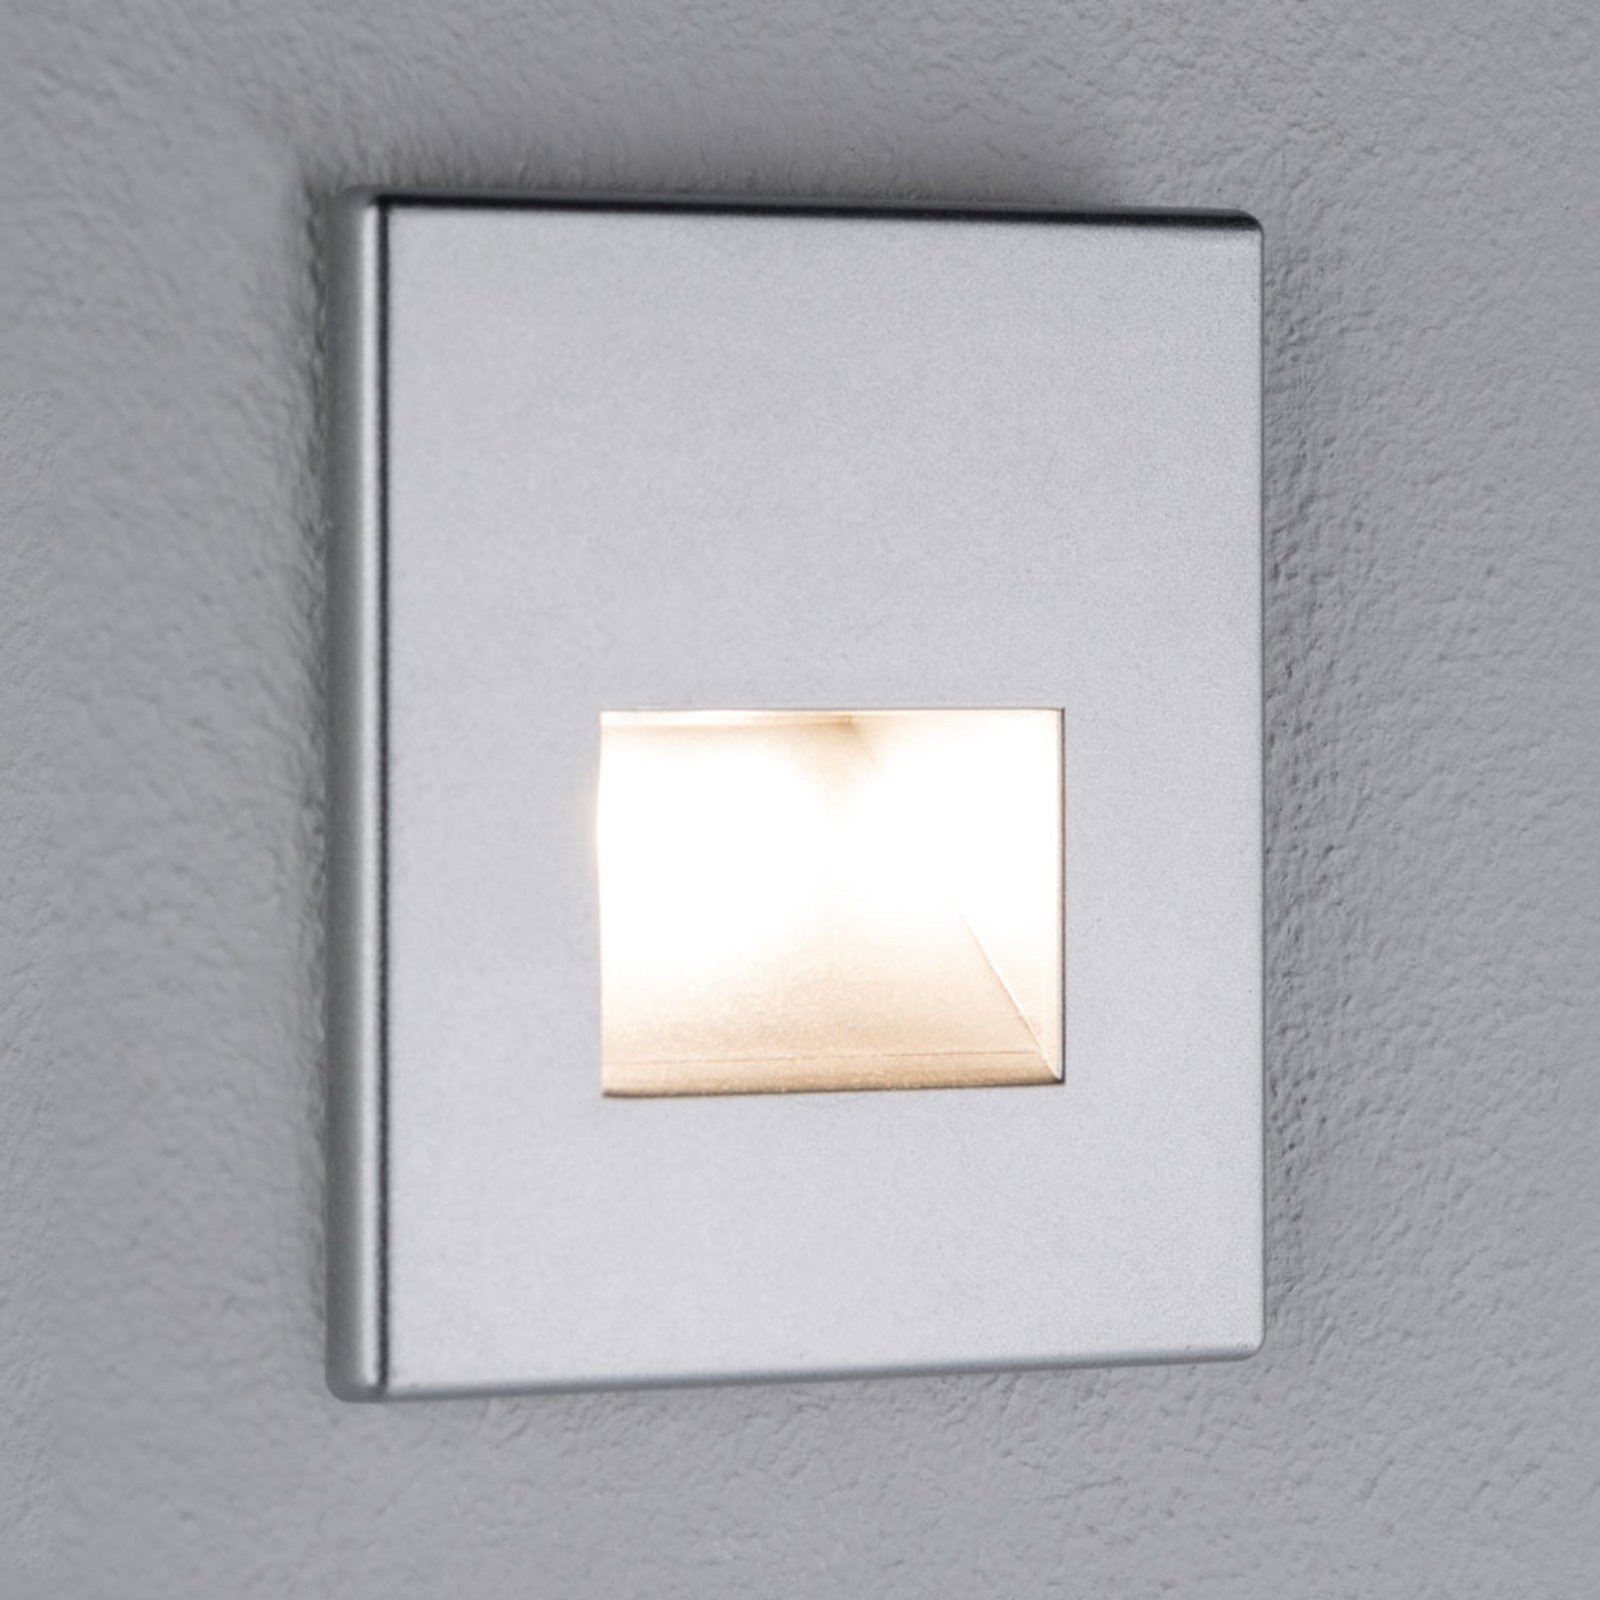 Paulmann LED-wandinbouwlamp Edge, chroom mat